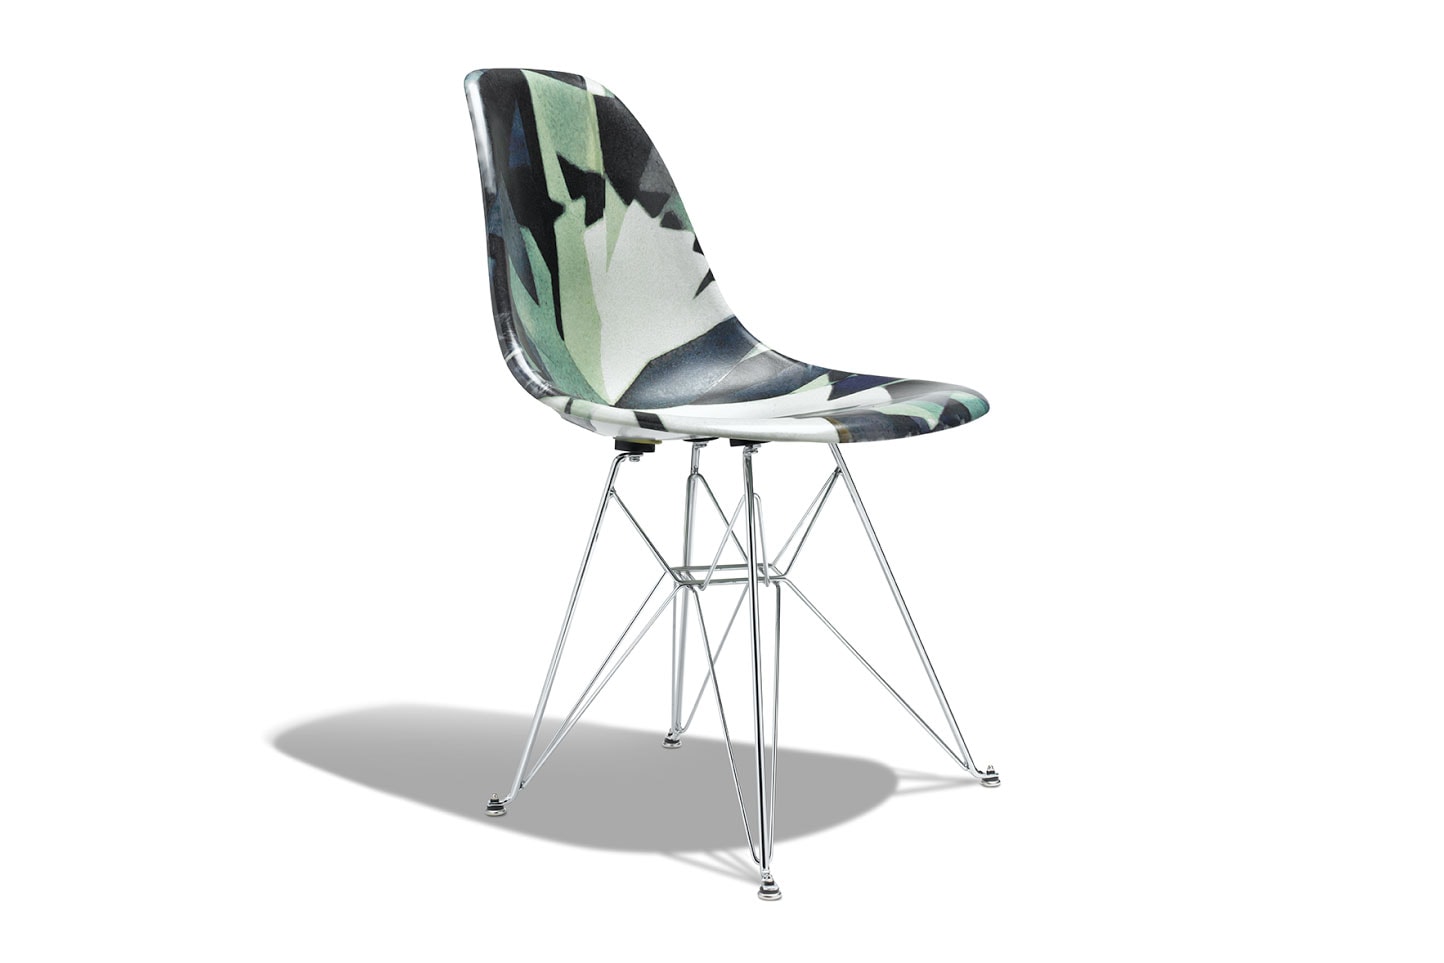 Diamond Supply Co. x Modernica Chair